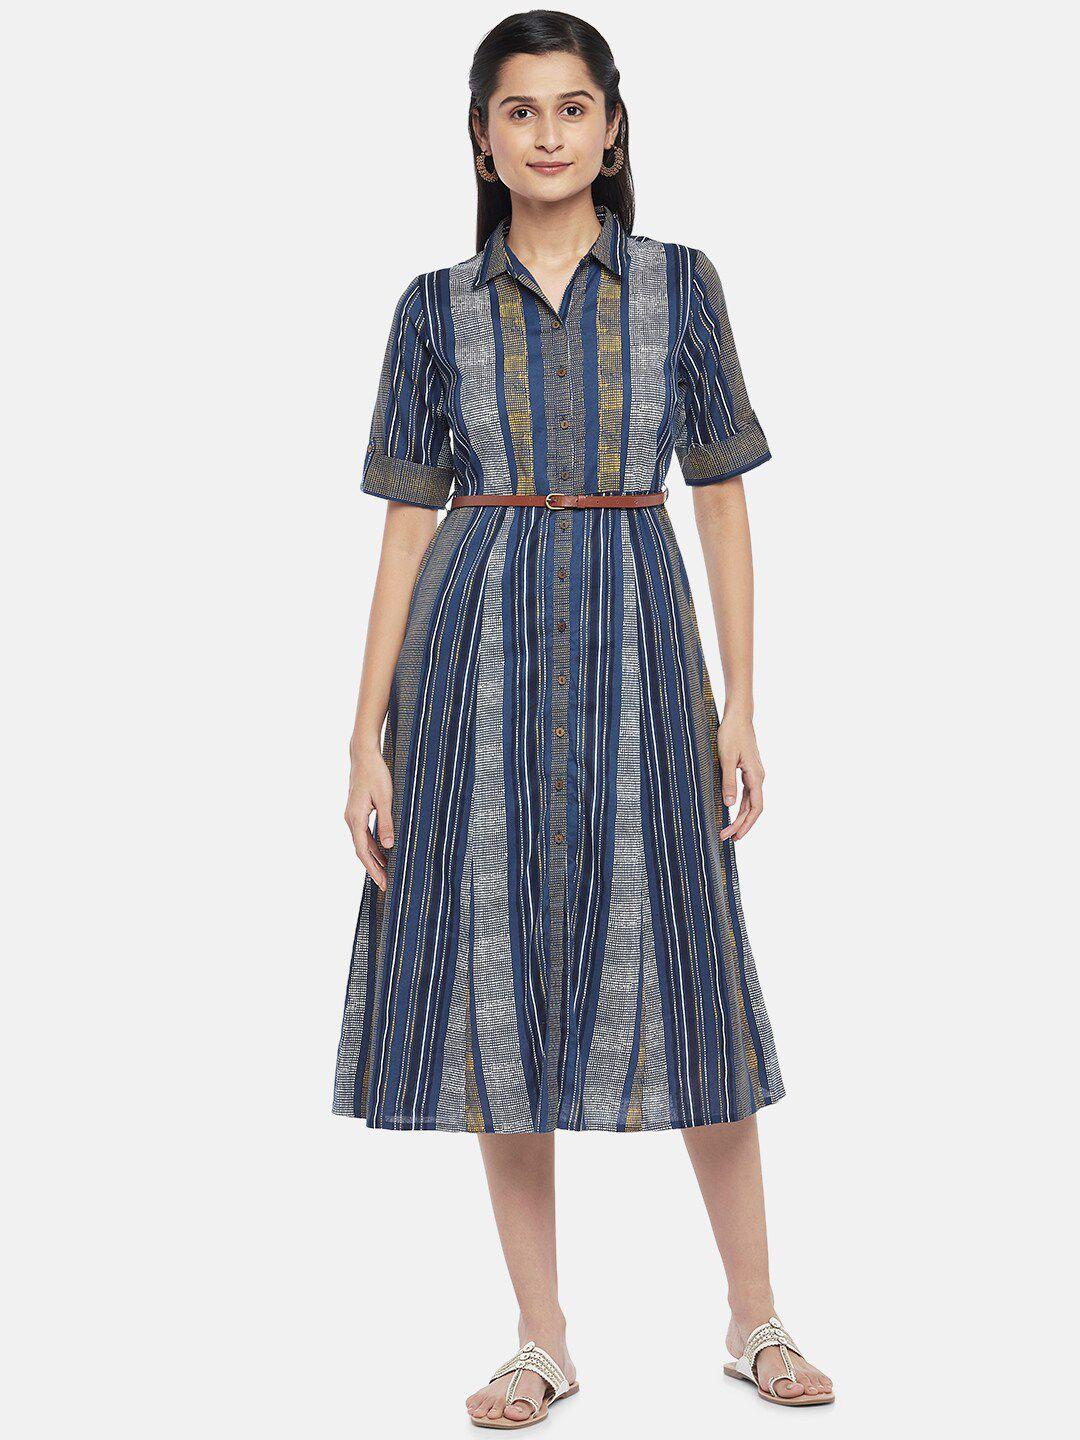 akkriti by pantaloons blue & white striped shirt midi dress